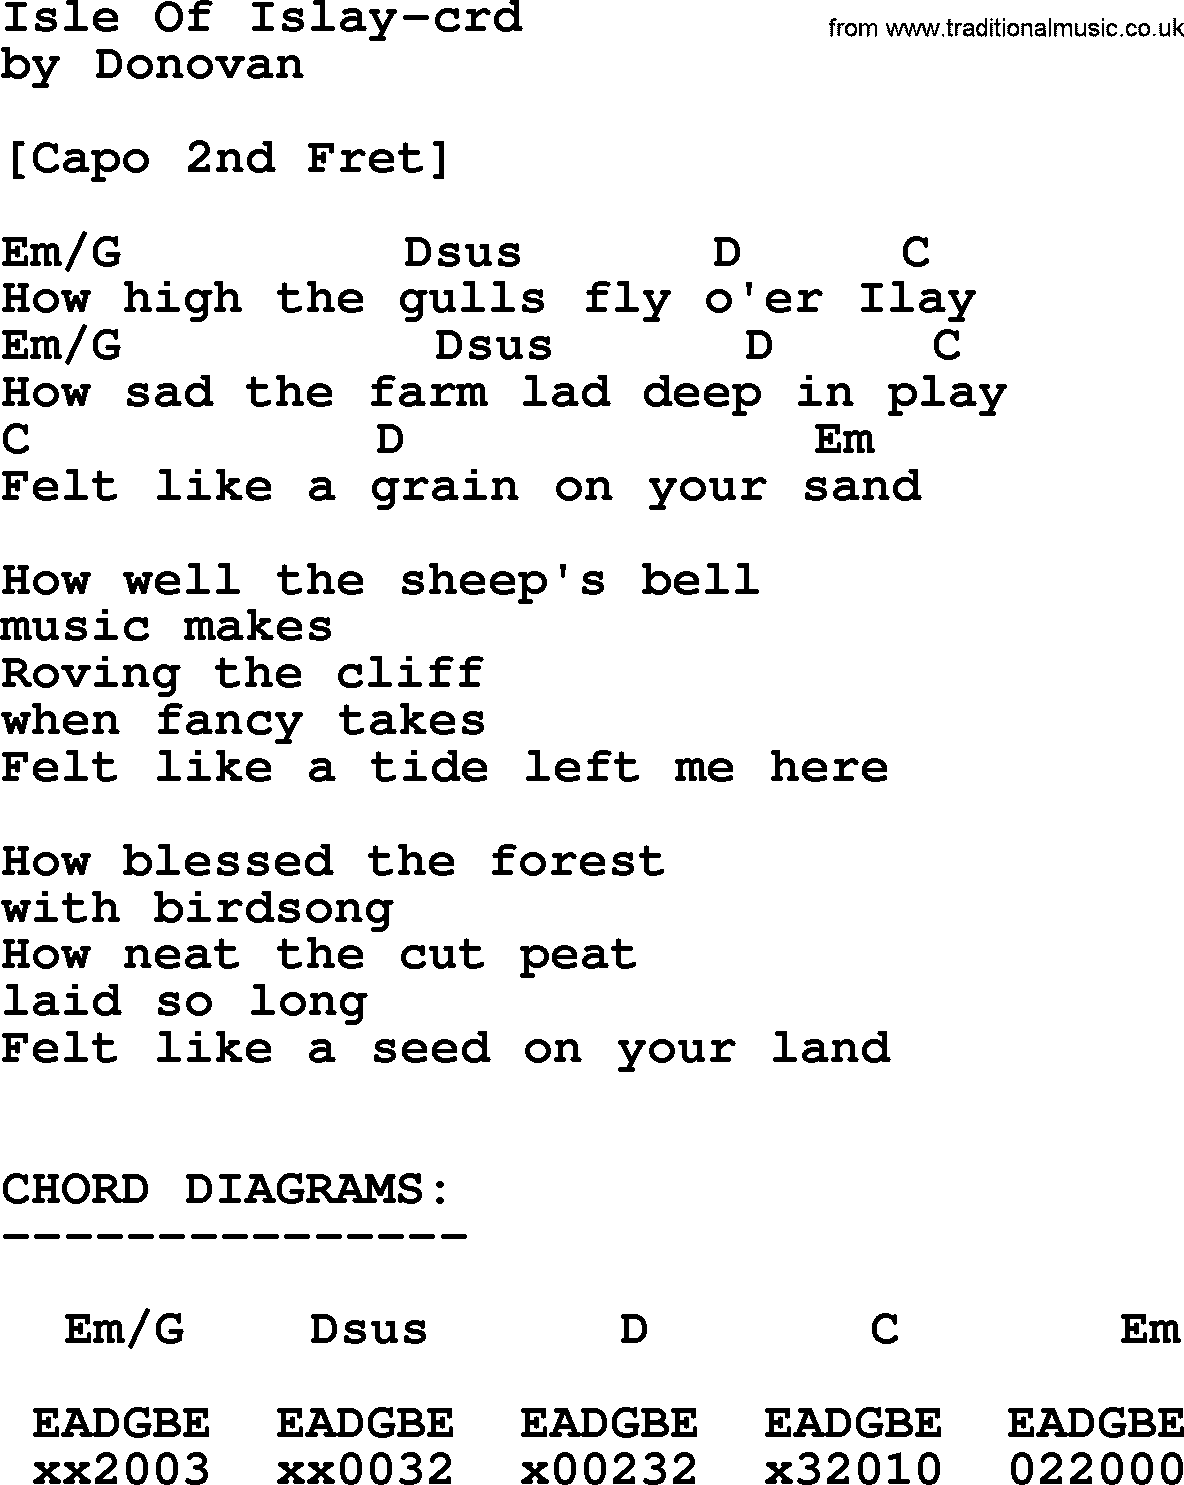 Donovan Leitch song: Isle Of Islay lyrics and chords